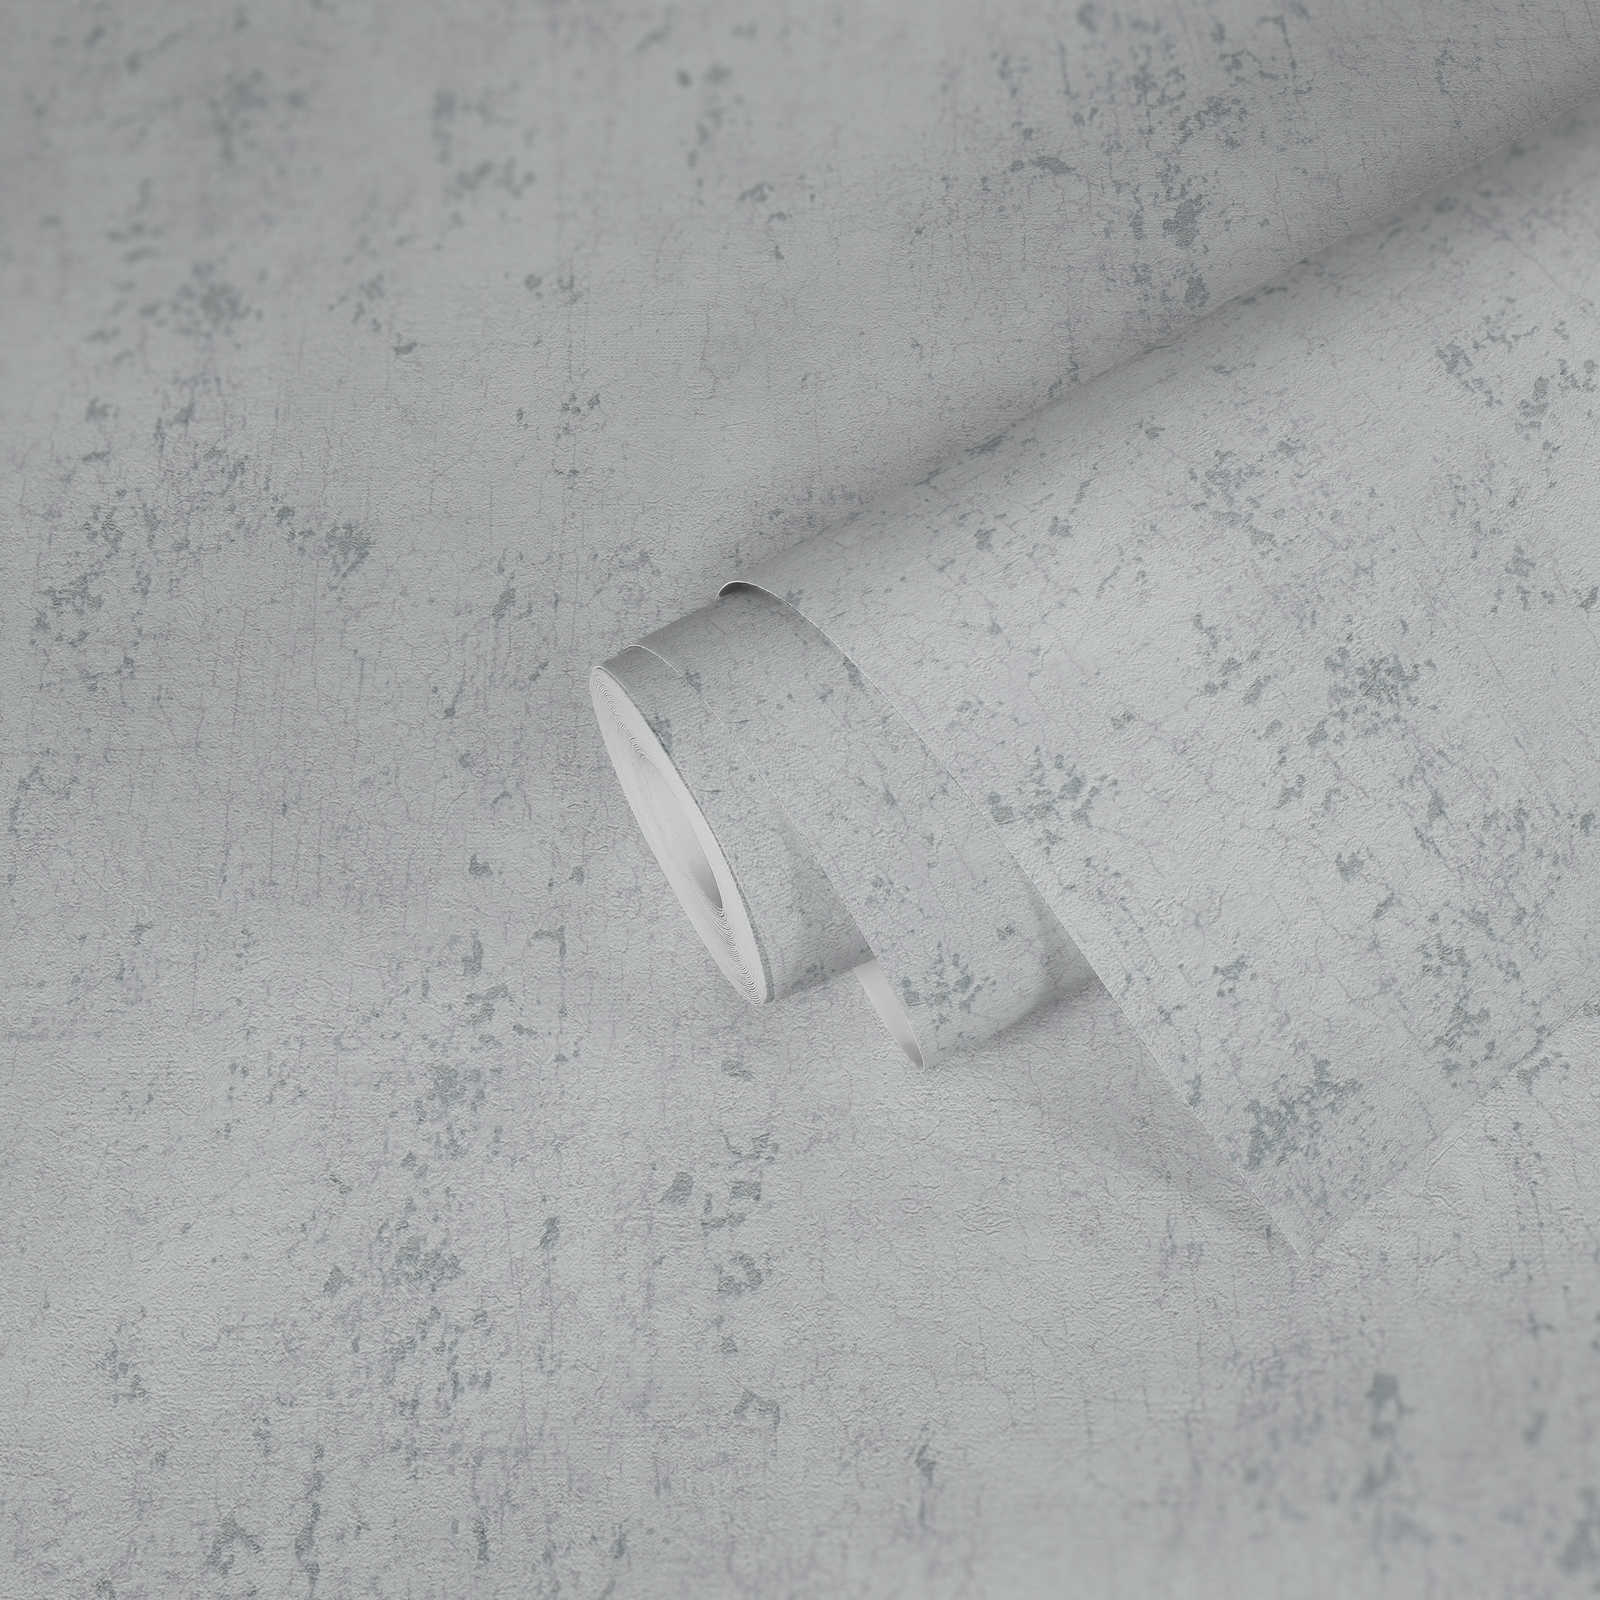             papel pintado de yeso óptico gris claro con craquelado plateado - gris, metálico, blanco
        